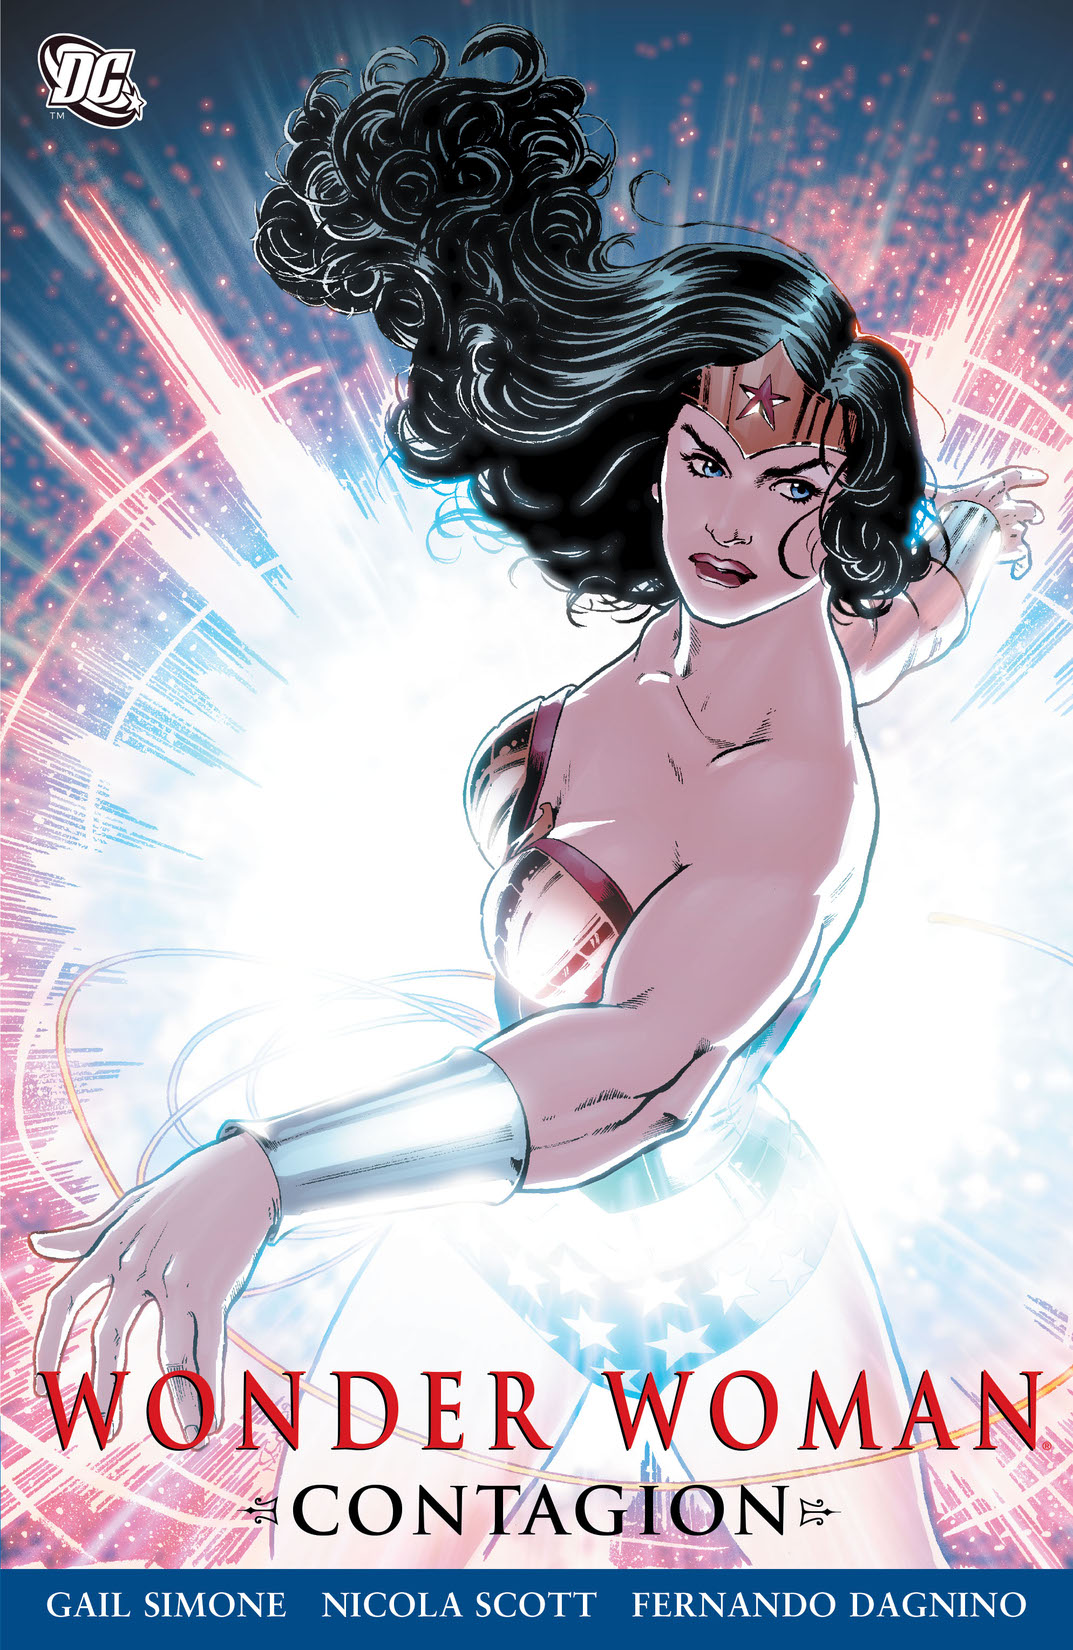 Wonder Woman: Contagion preview images